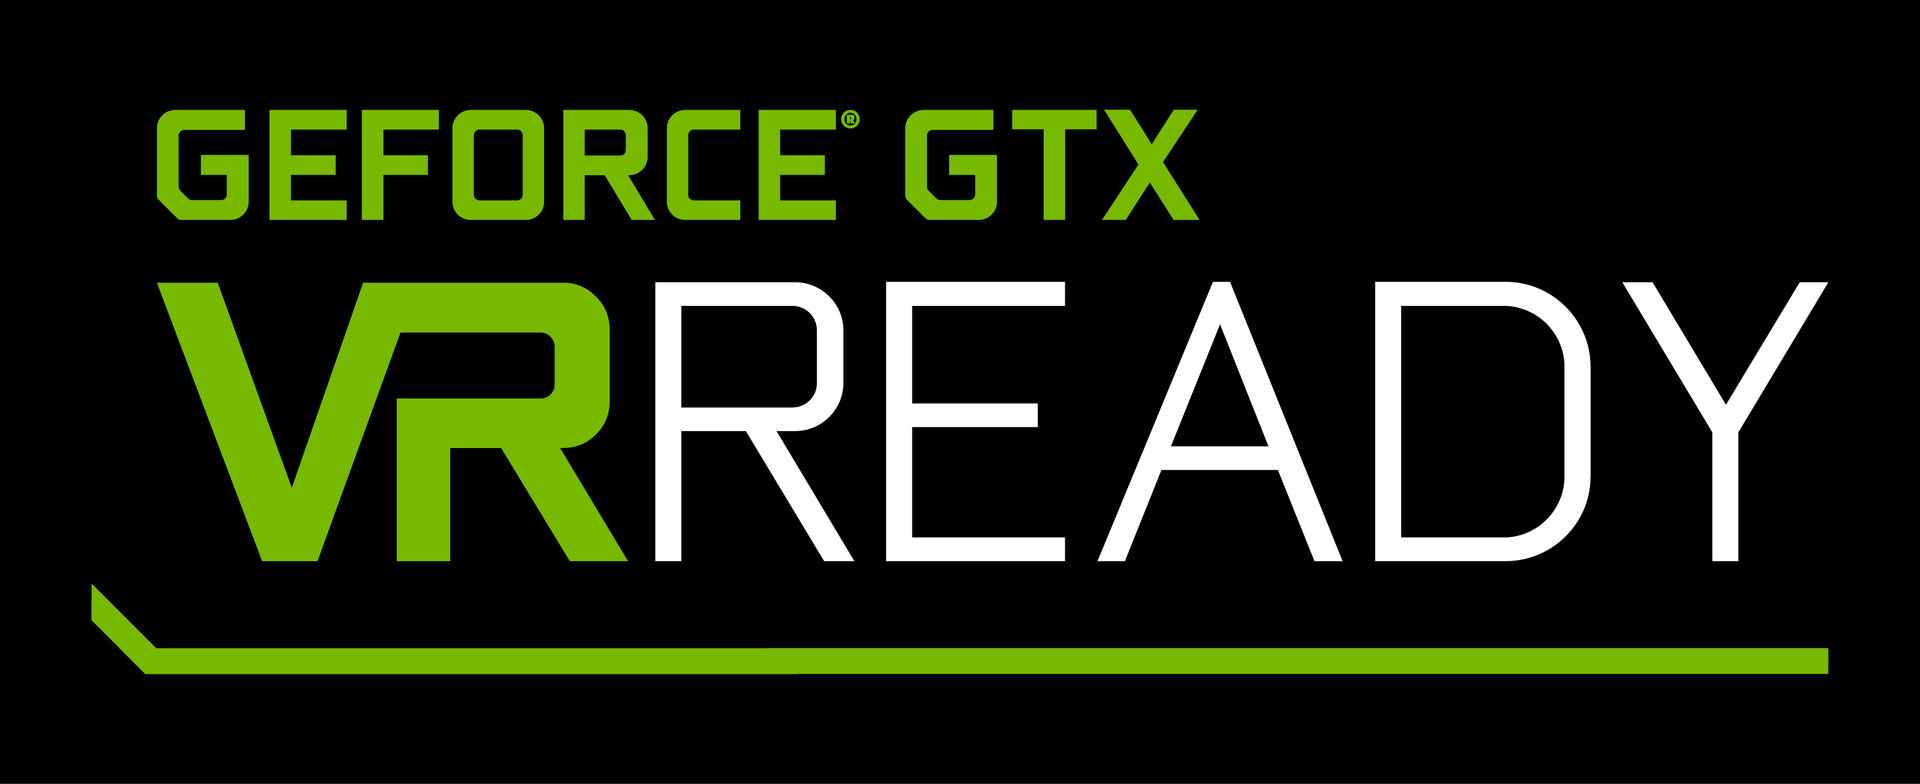 Nvidia GeForce GTX VR Ready